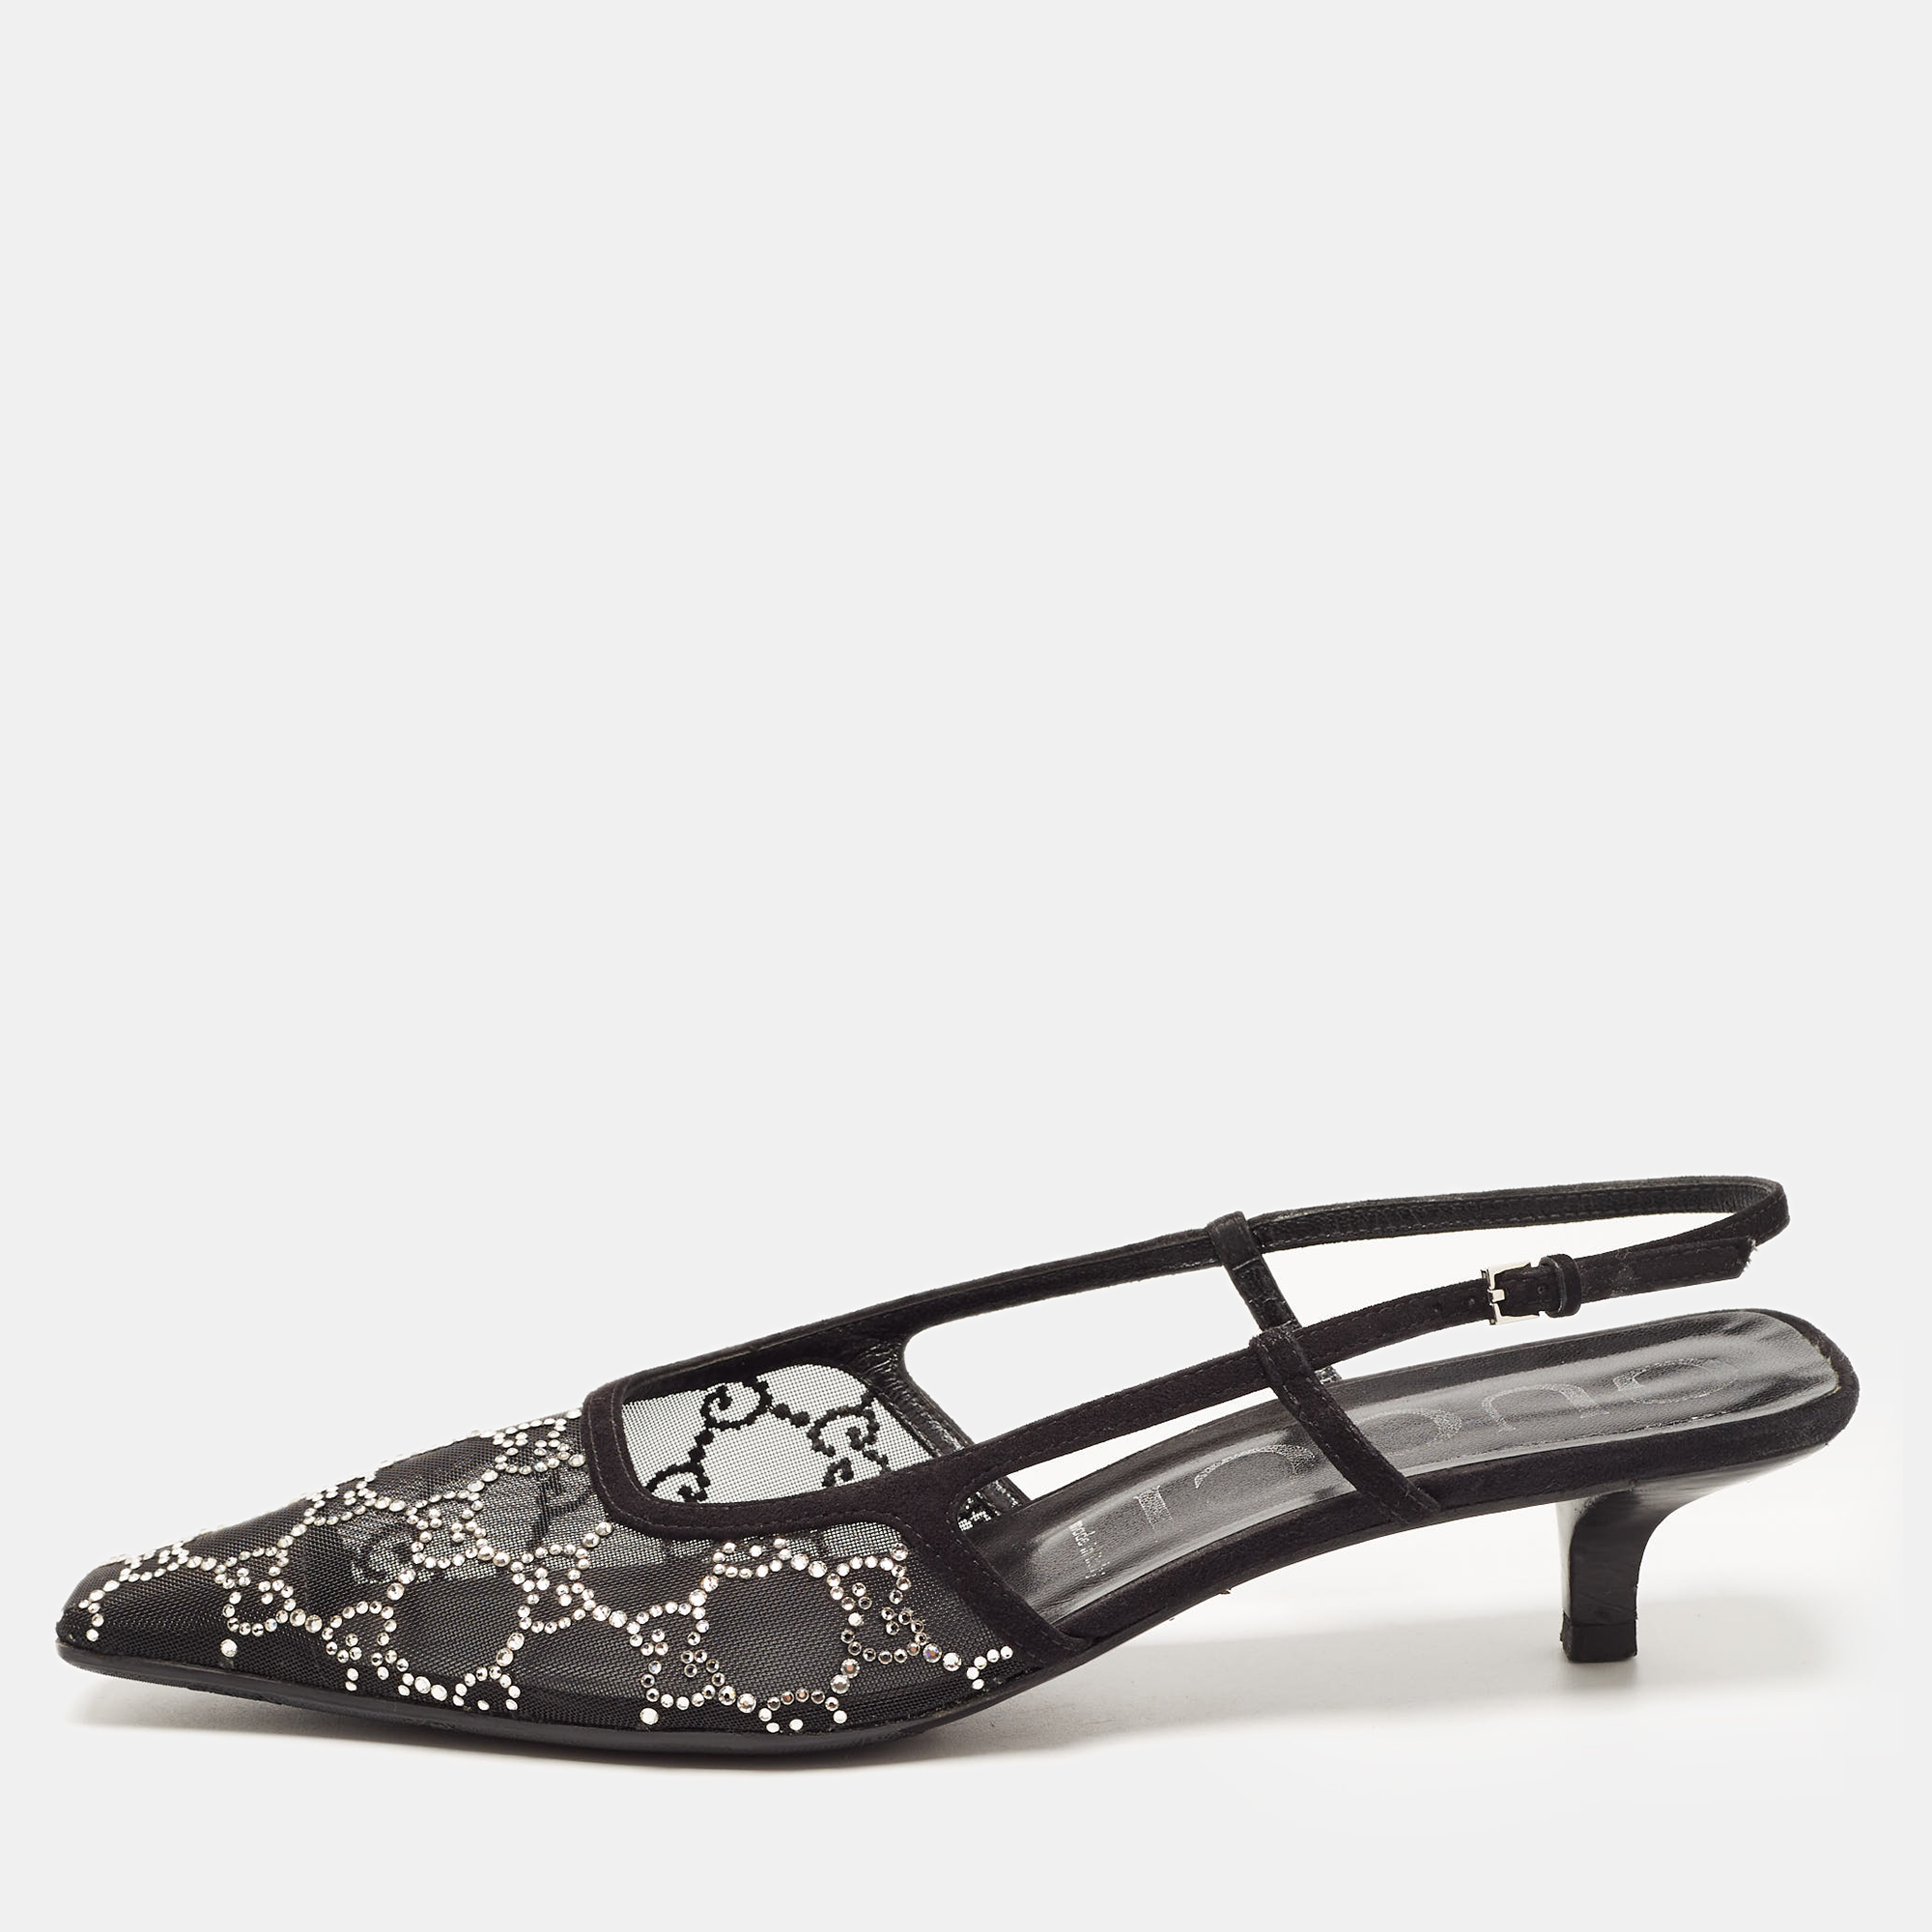 Gucci Tricolor Leather and Canvas Rimini Slingback Sandals Size 41.5